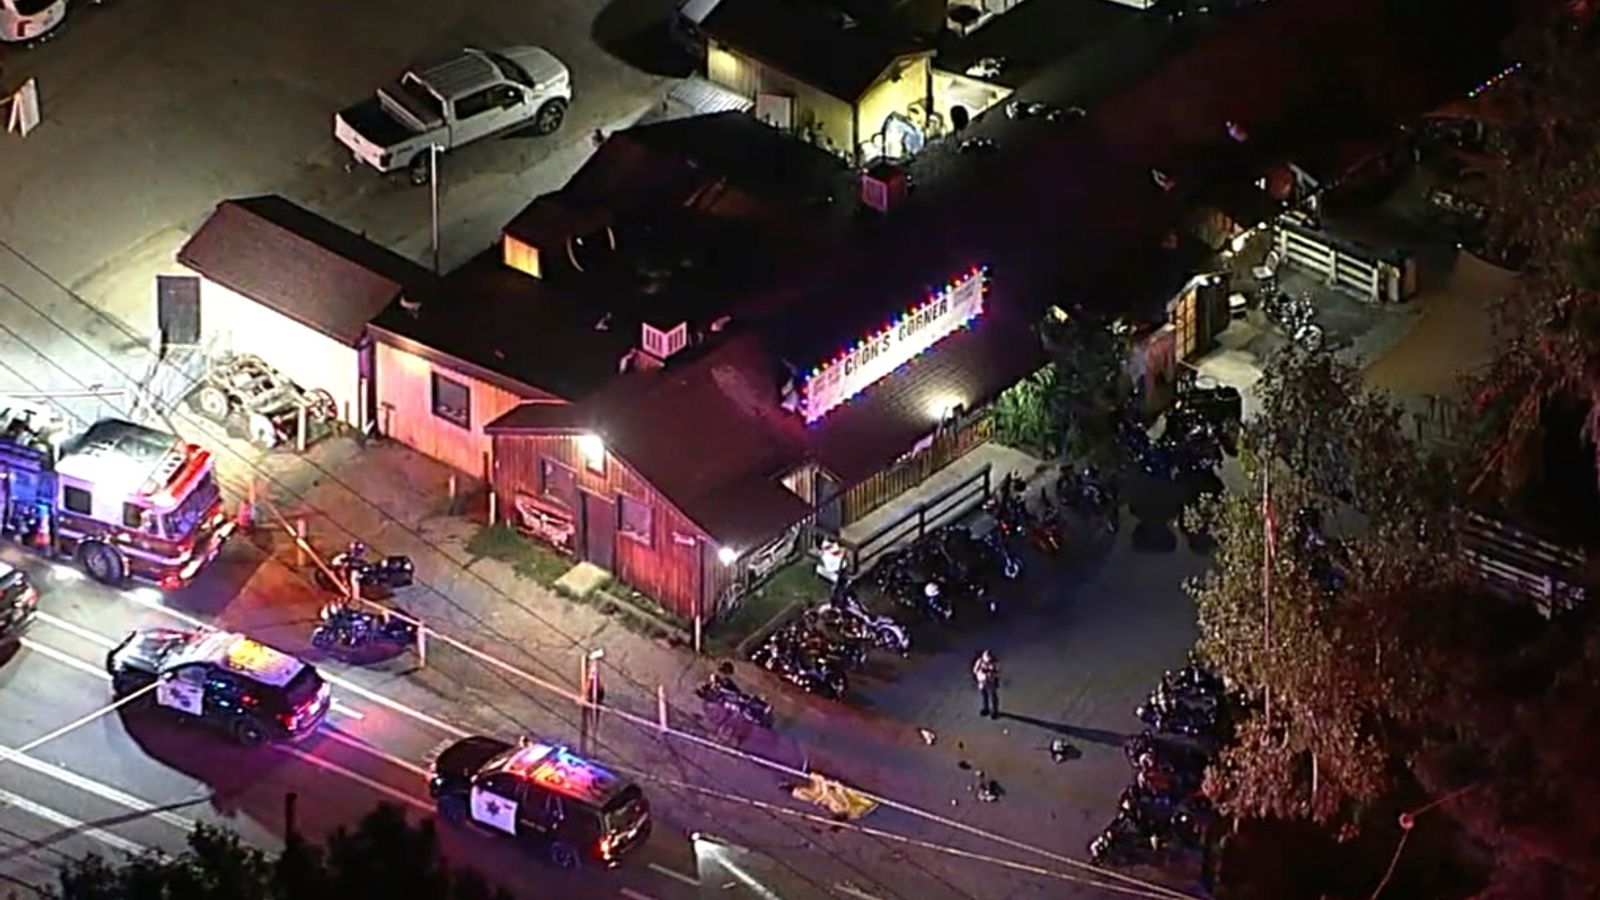 Four dead including the gunman in shooting at California biker bar